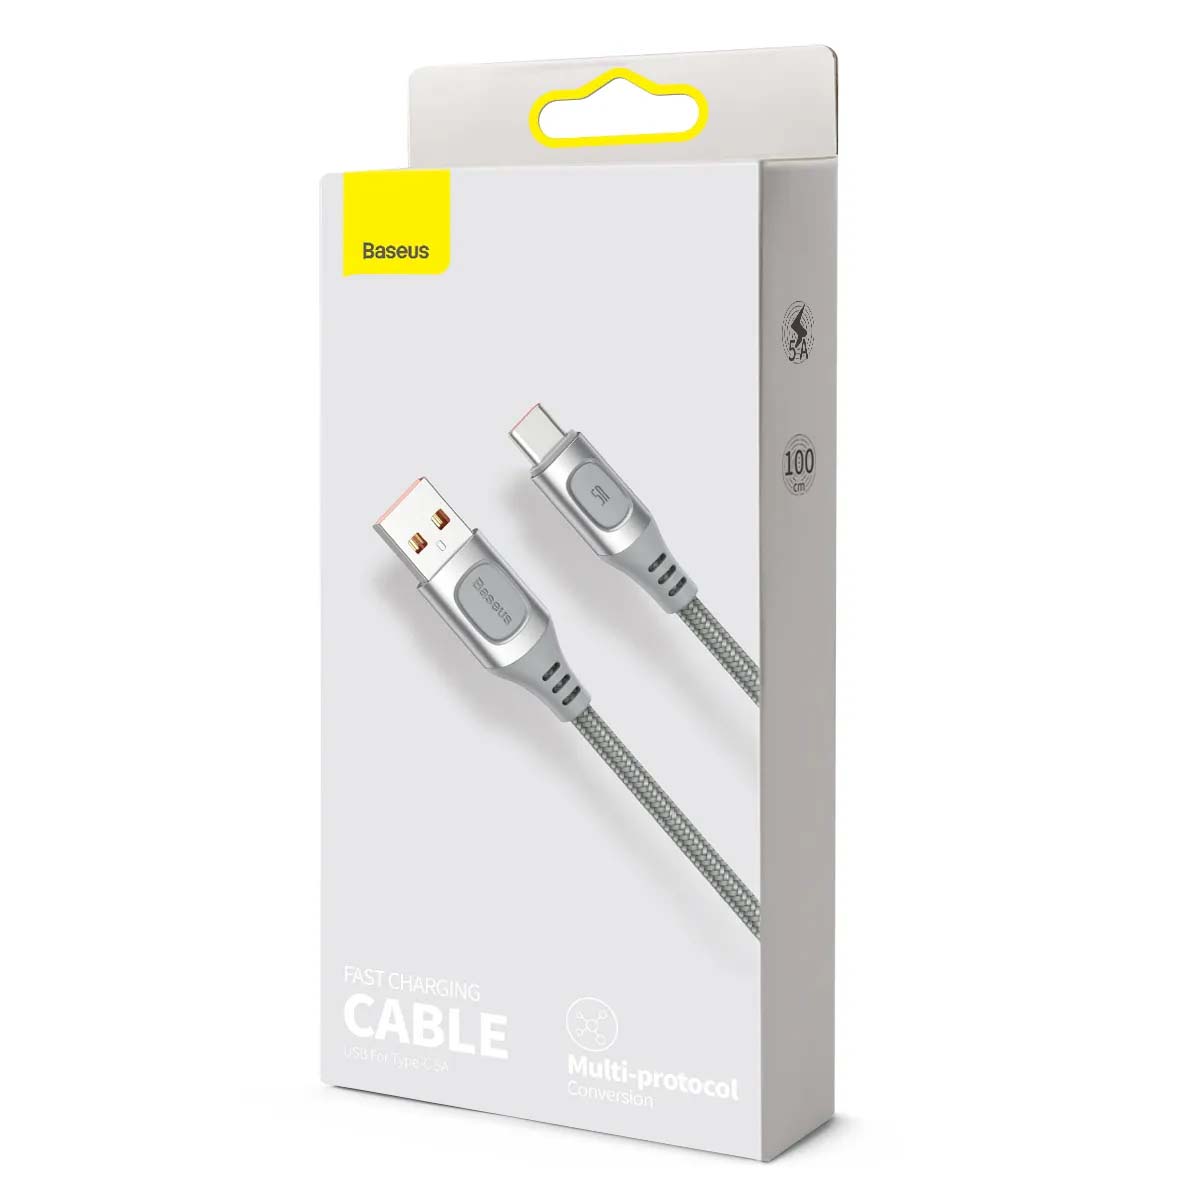 Кабель Baseus Fast Charging Cable USB Type C, 5A, длина 1 метр, цвет серый